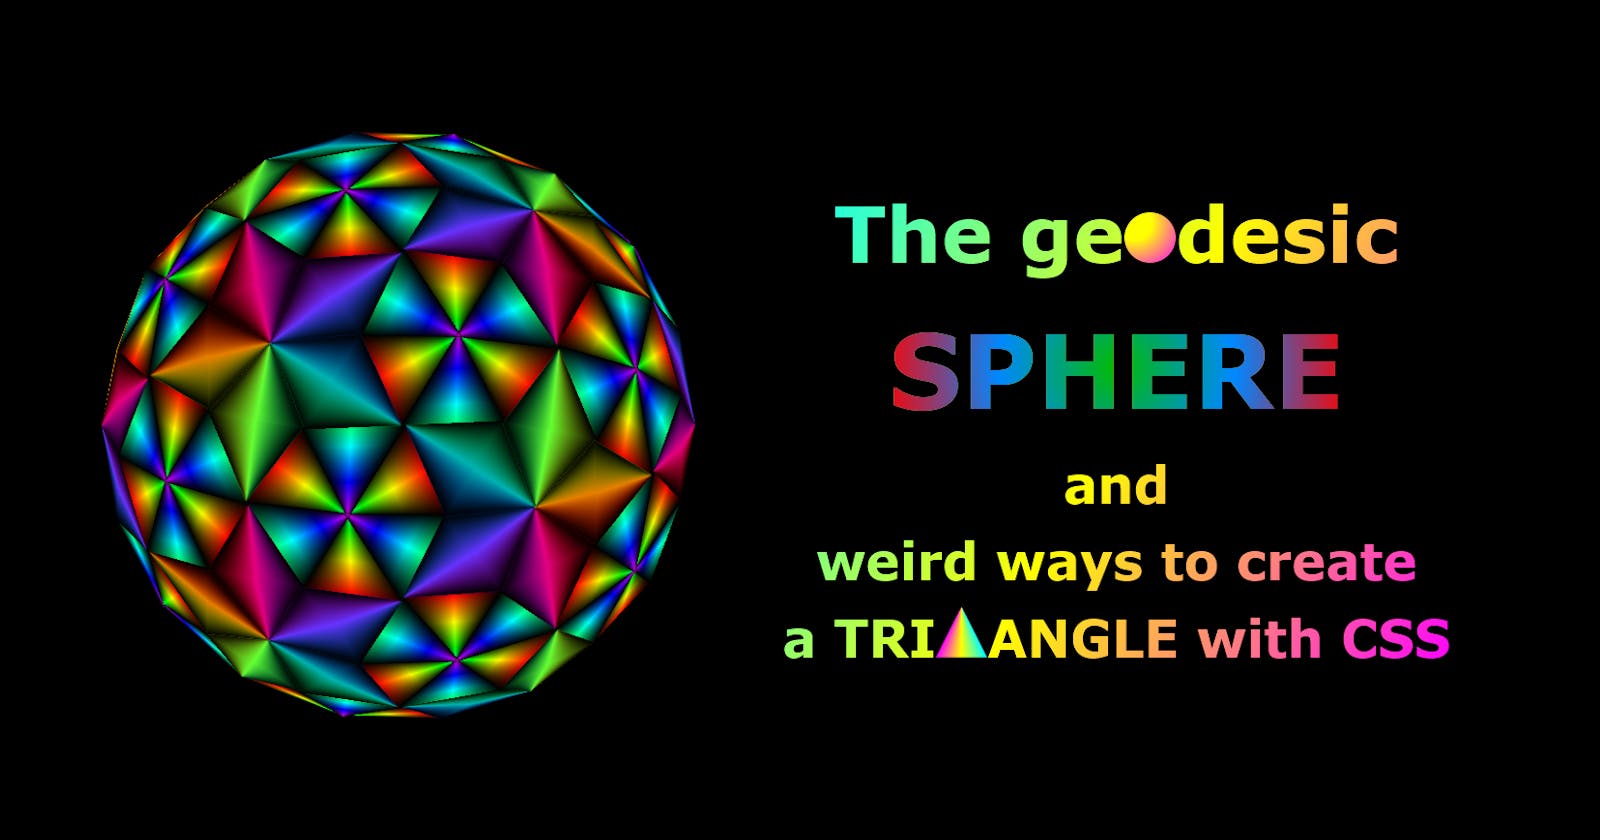 The geodesic sphere